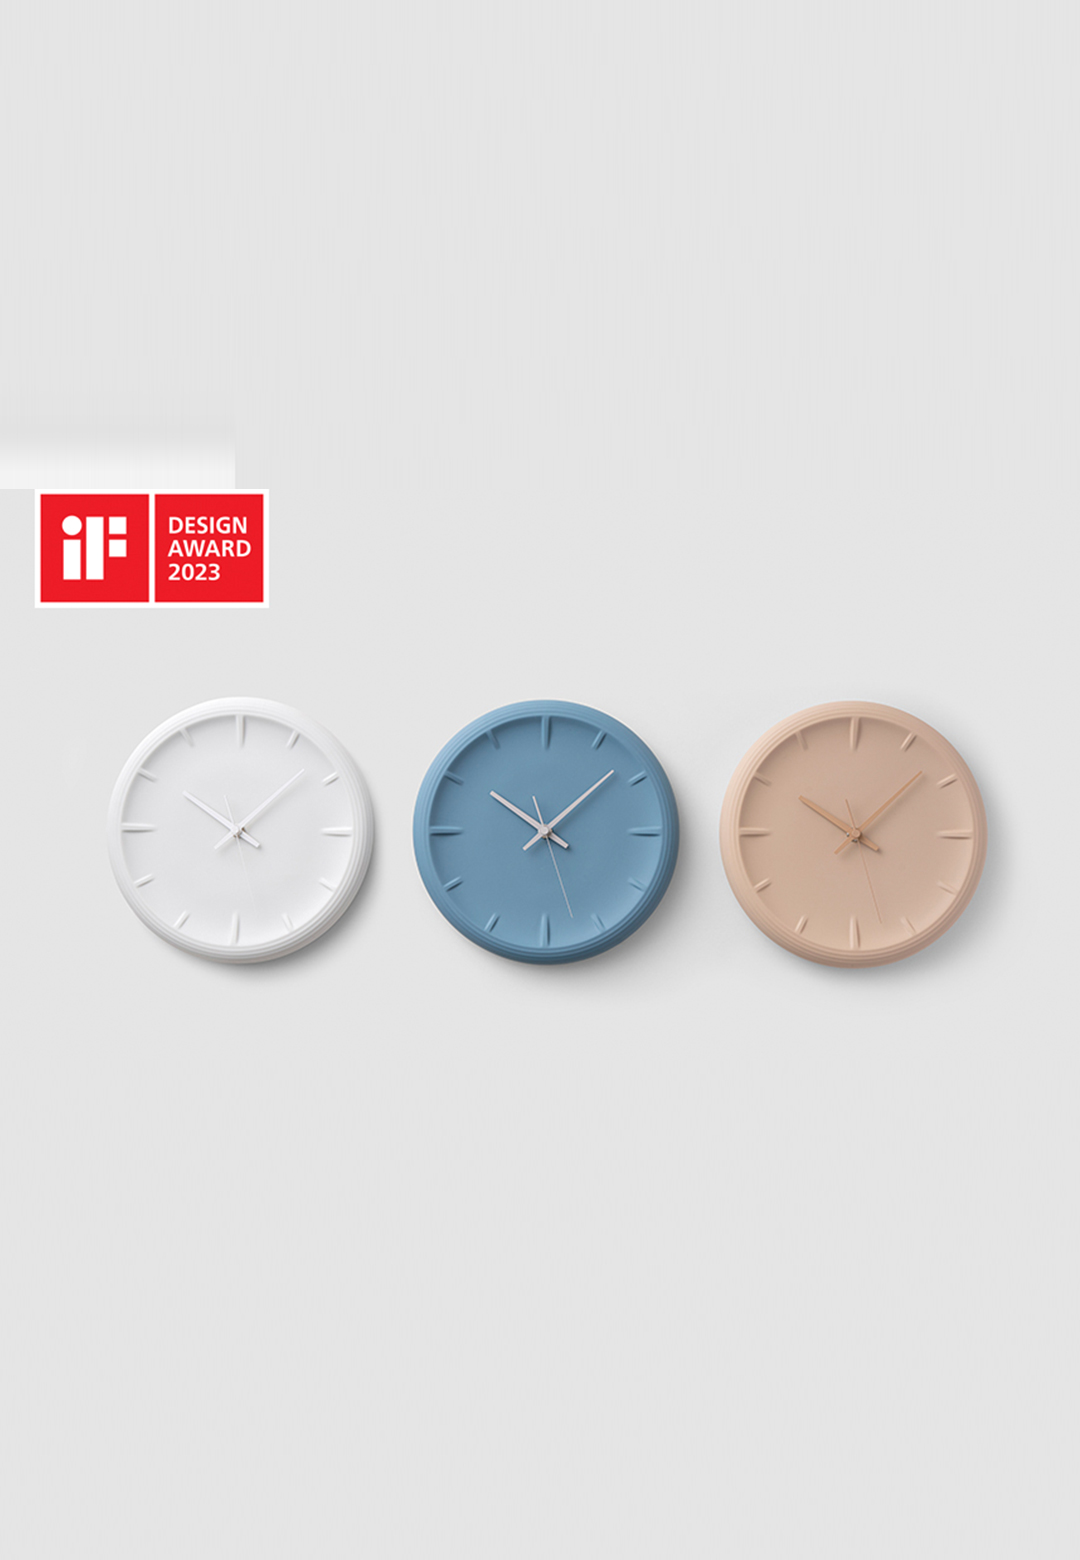 ‘Relief’ by Ryosuke Fukusada for TAKATA Lemnos wins the iF Design Award 2023